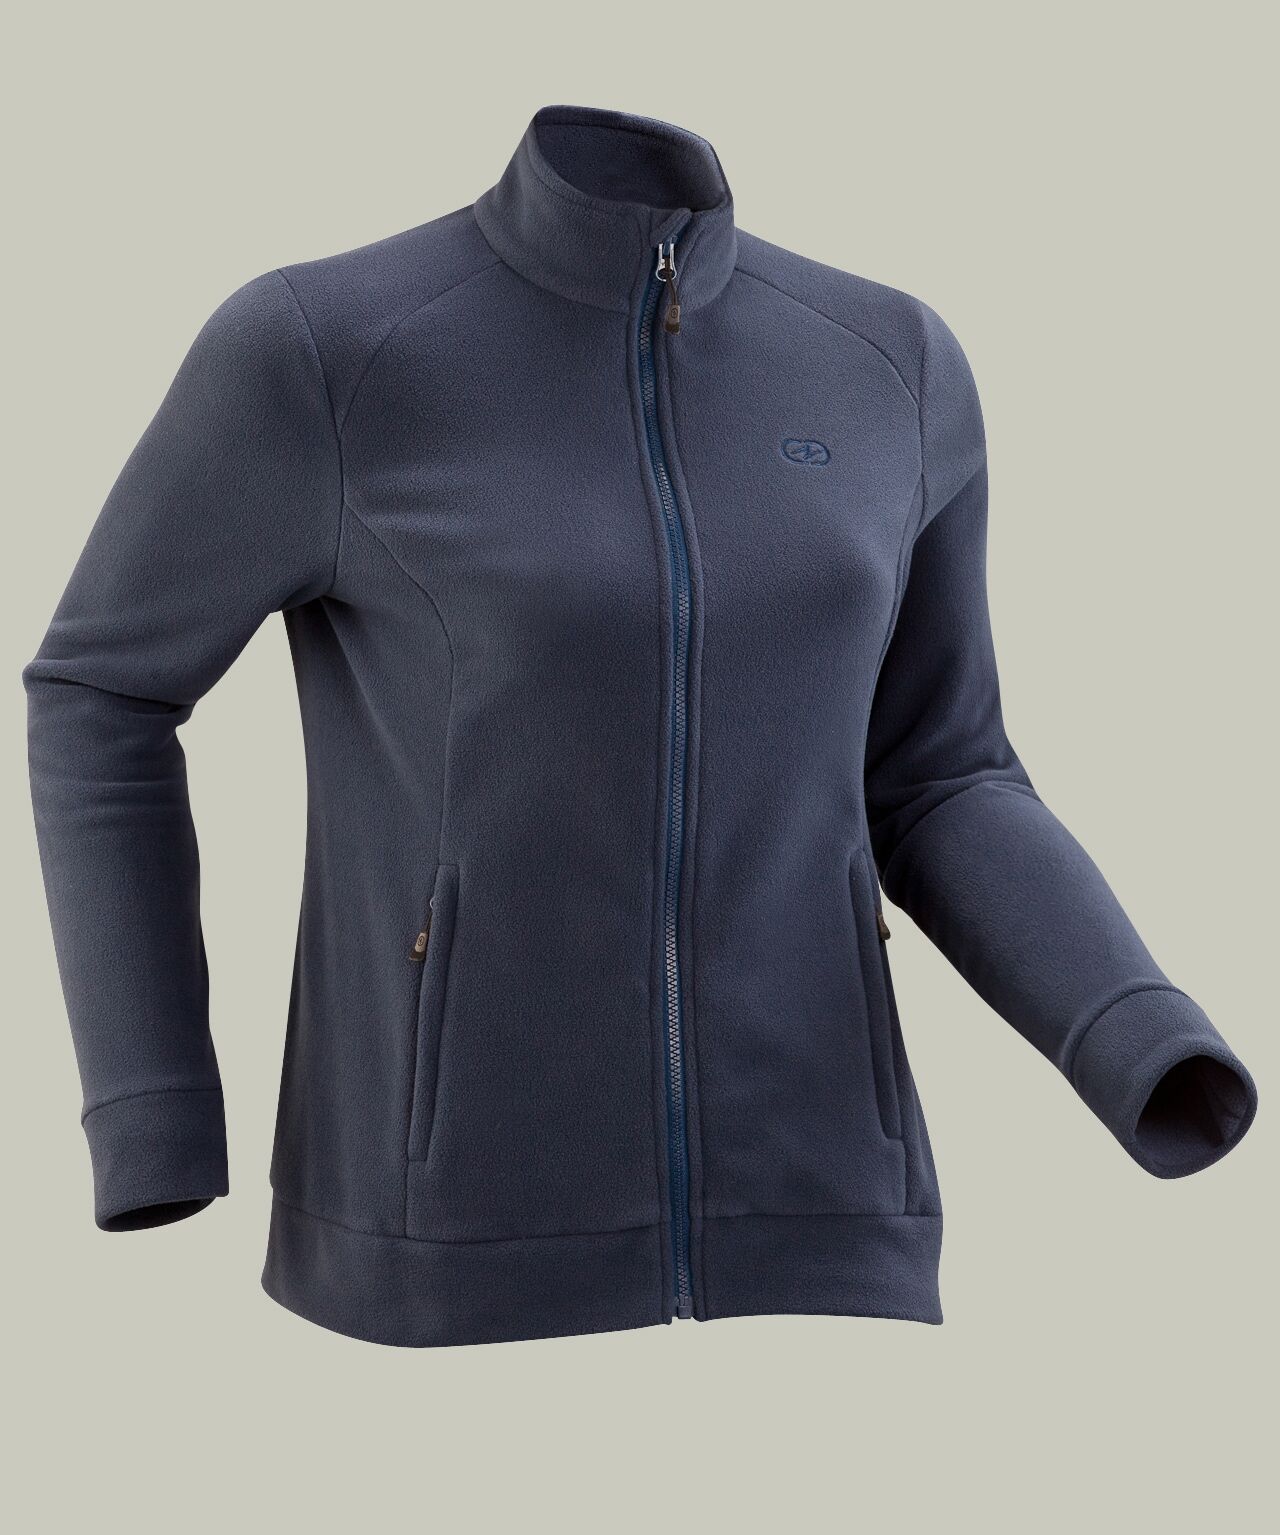 Damart Sport - Easy Fleece 200 - Fleece jacket - Women's